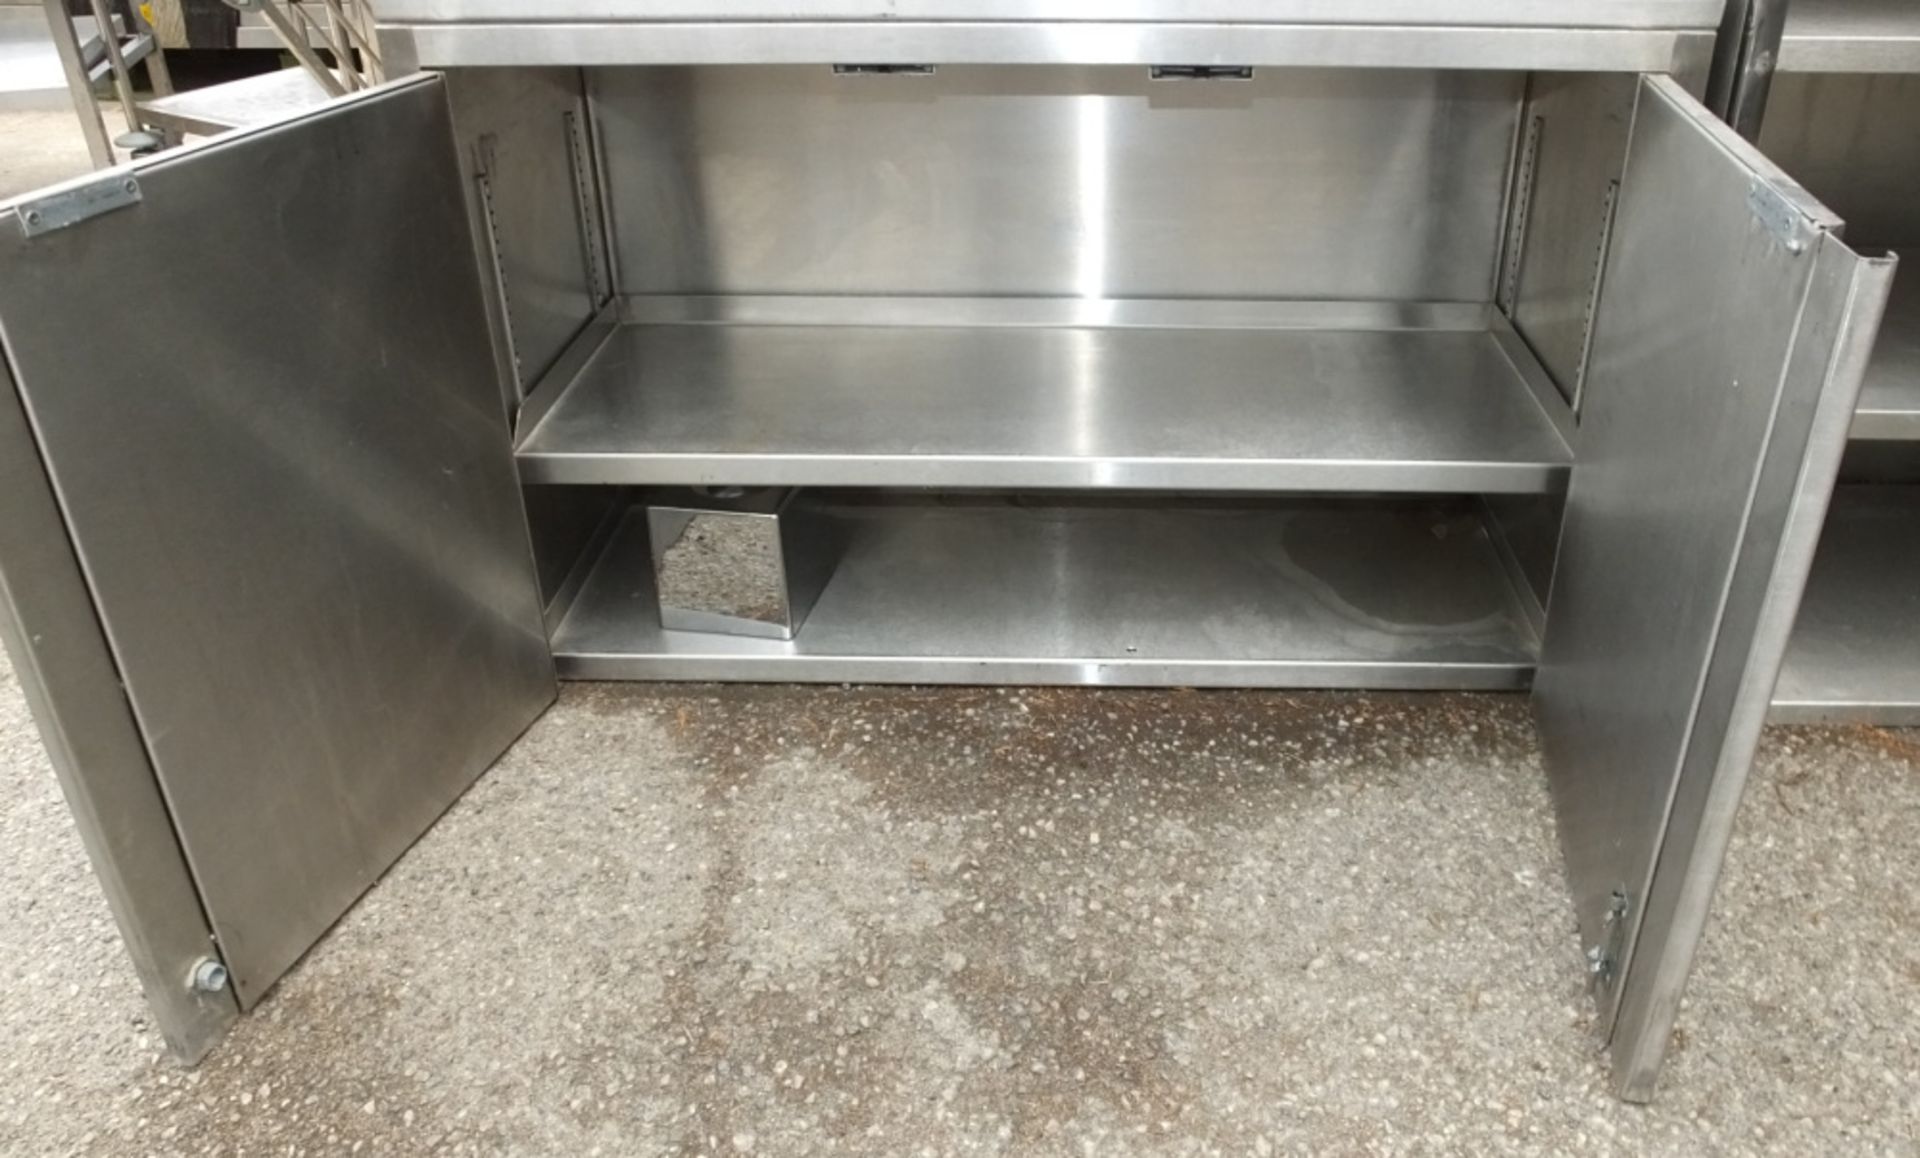 Stainless steel cabinet double door & shelf L 100 x W 40 x H 70cm - Image 2 of 3